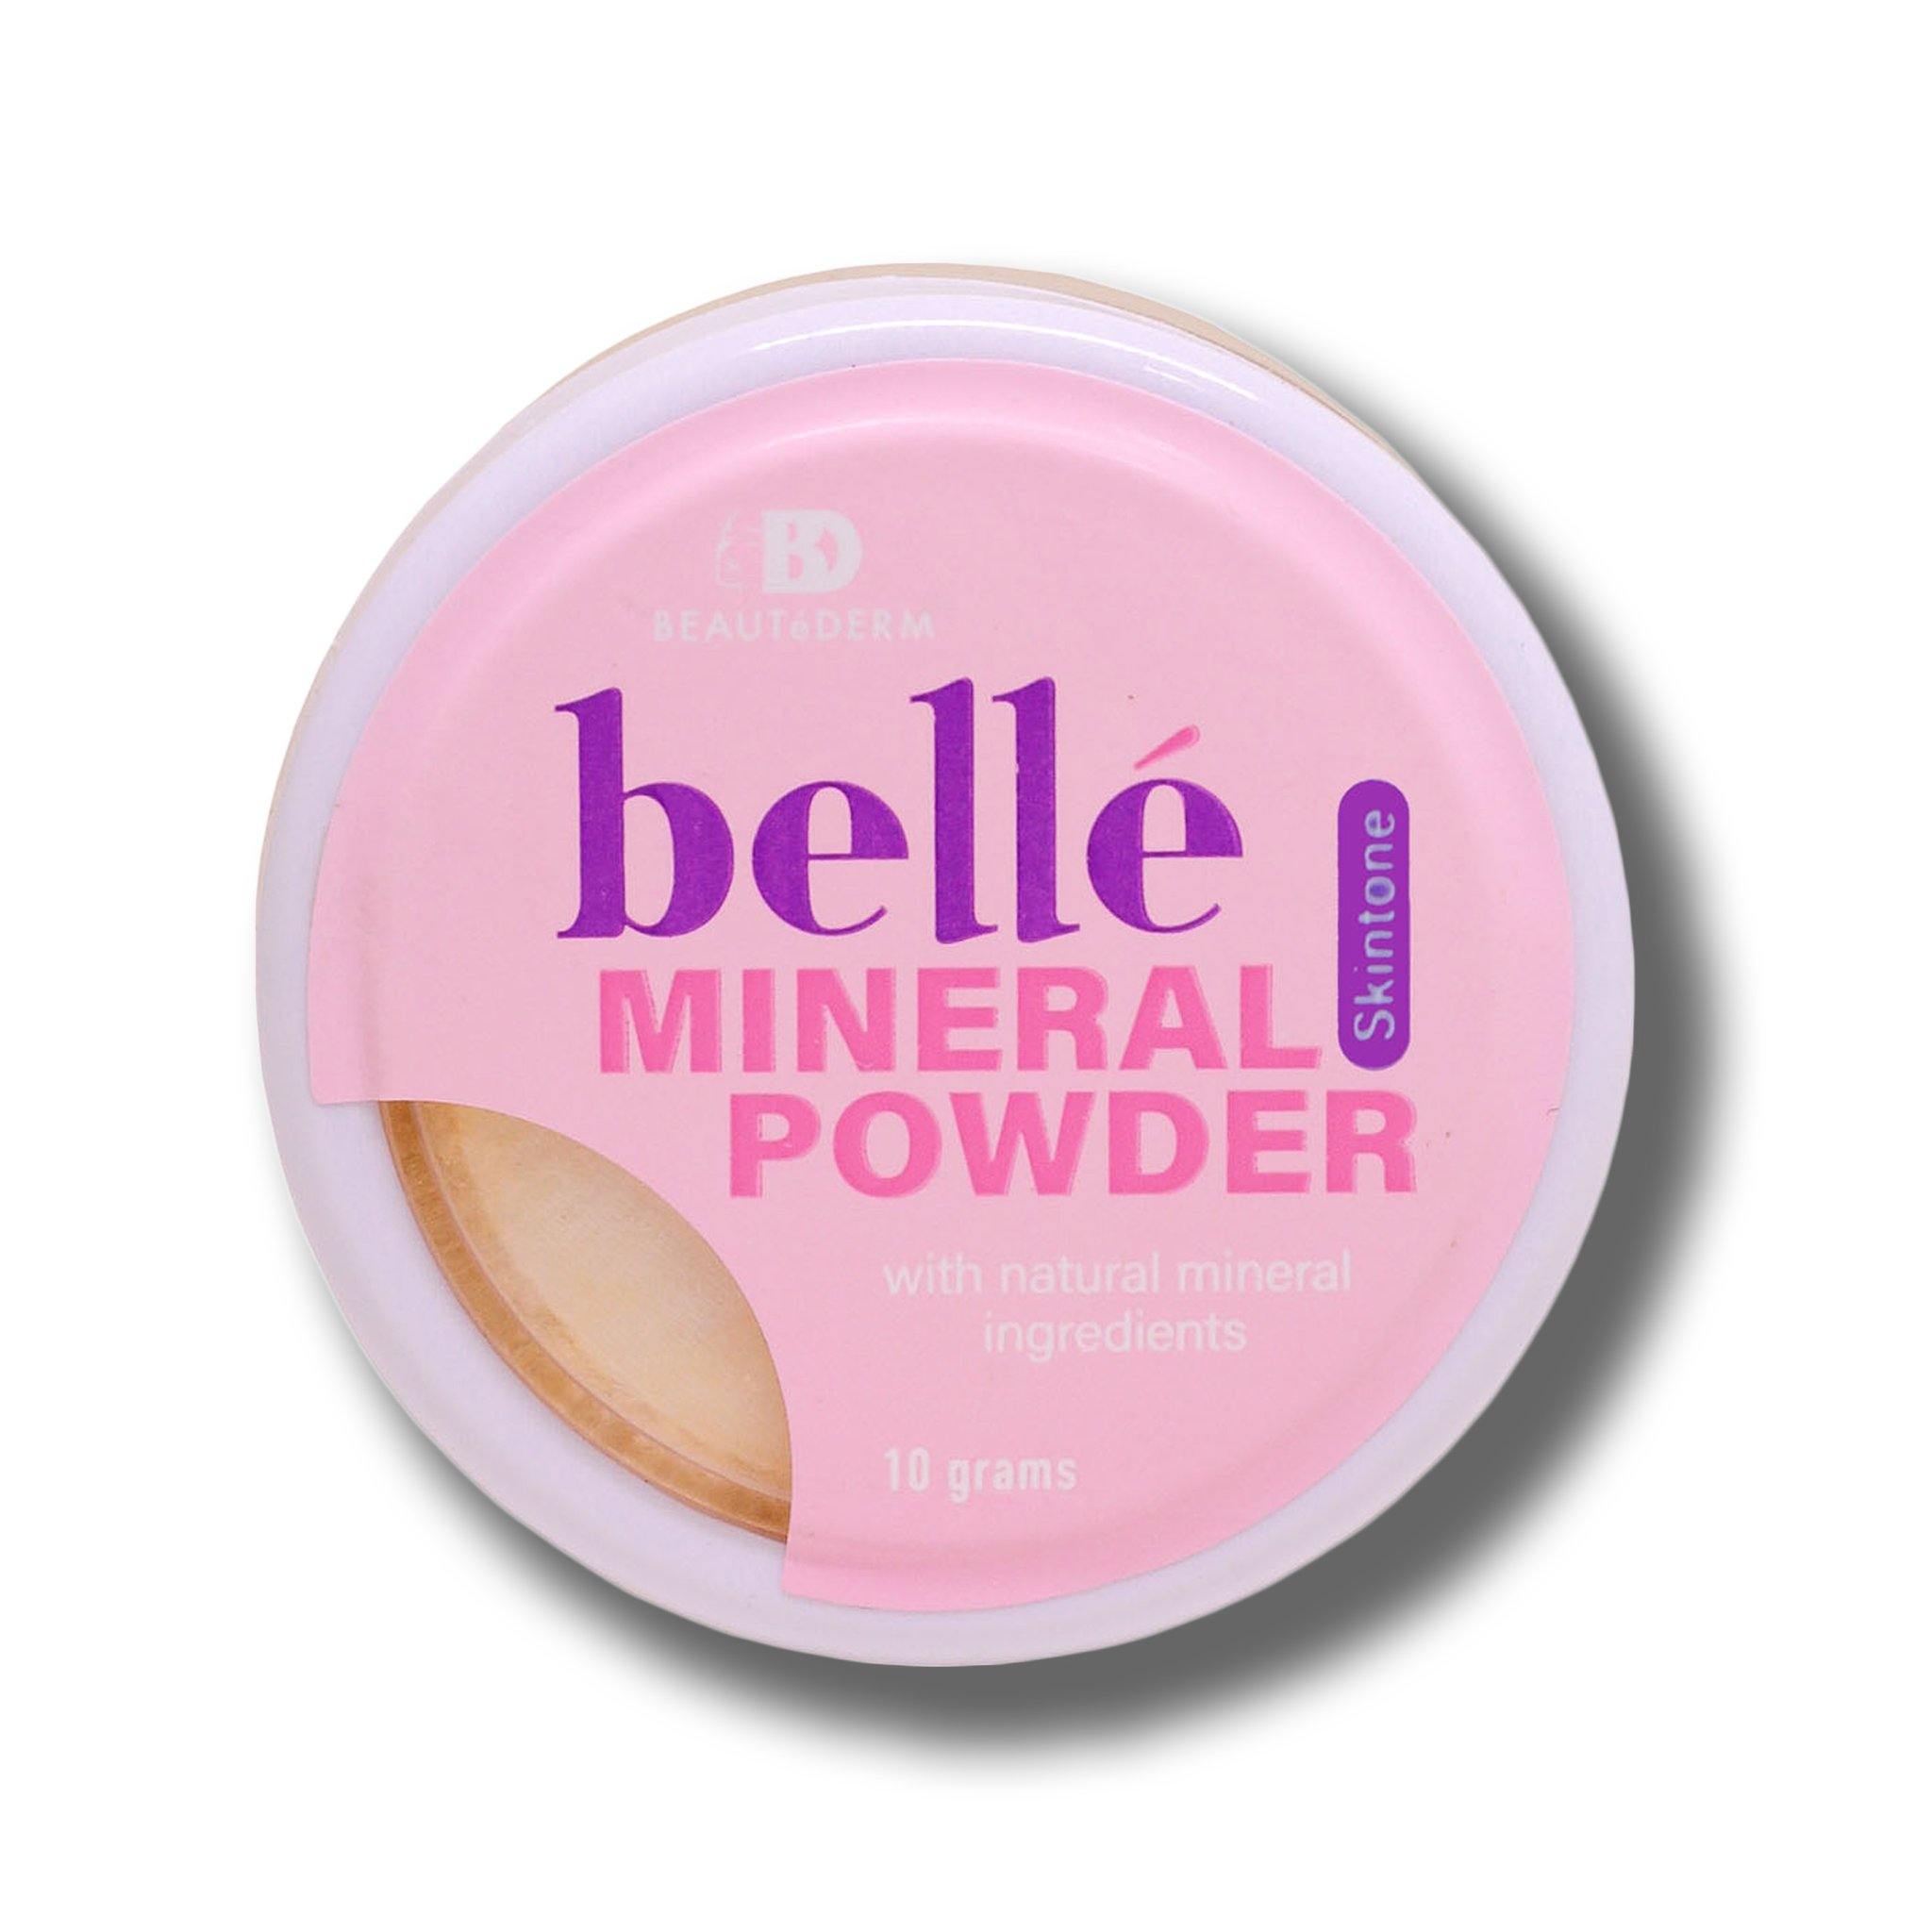 Belle Mineral Powder, Skintone shade, 10g, by Beautederm